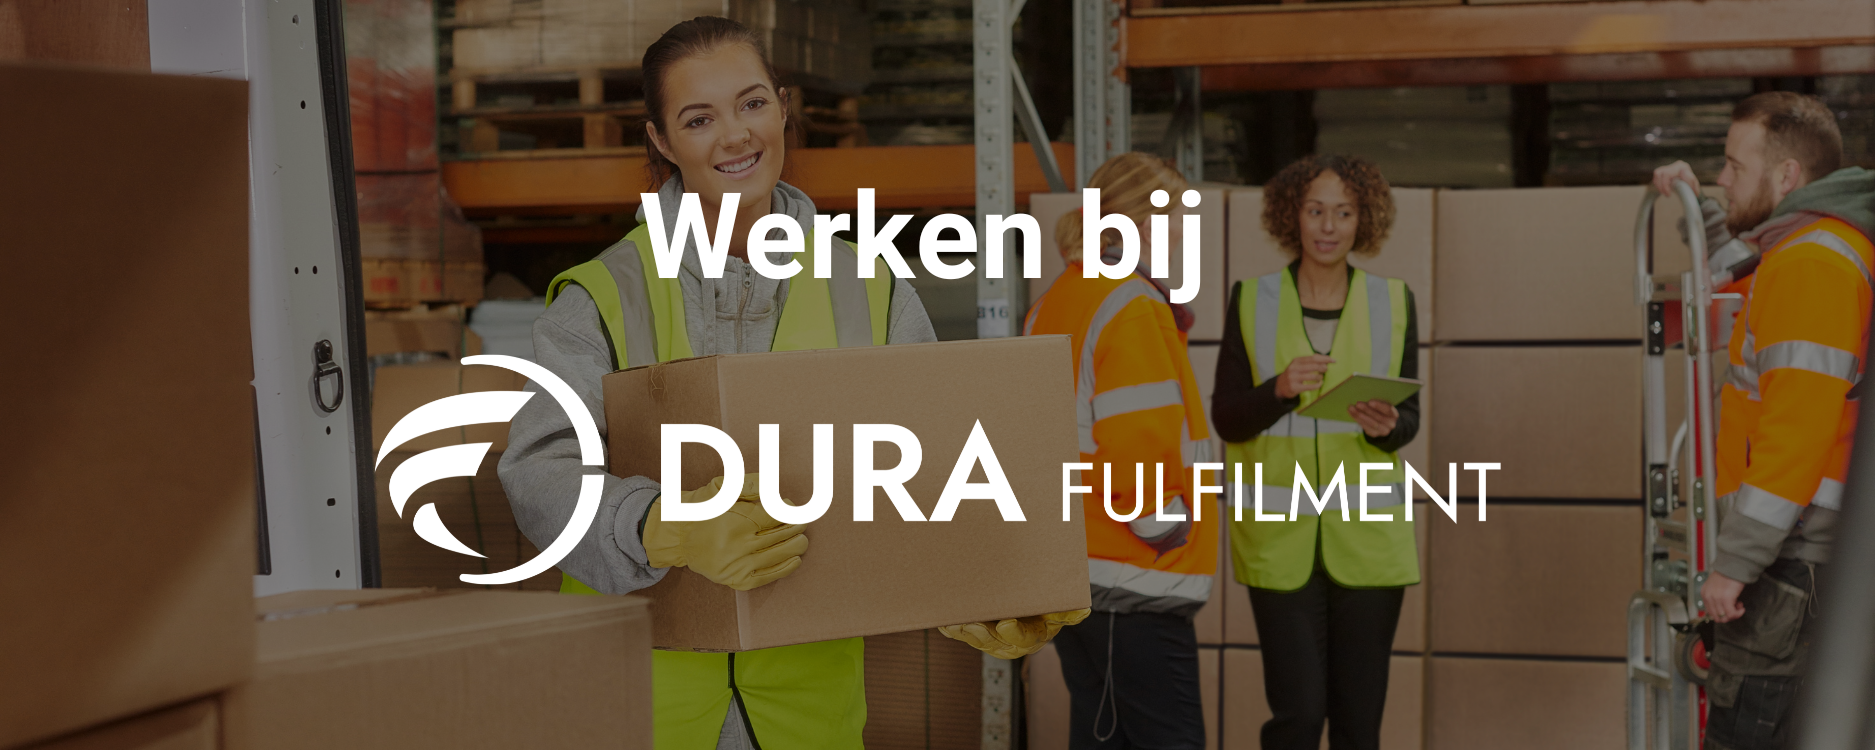 werken bij Dura Fulfilment